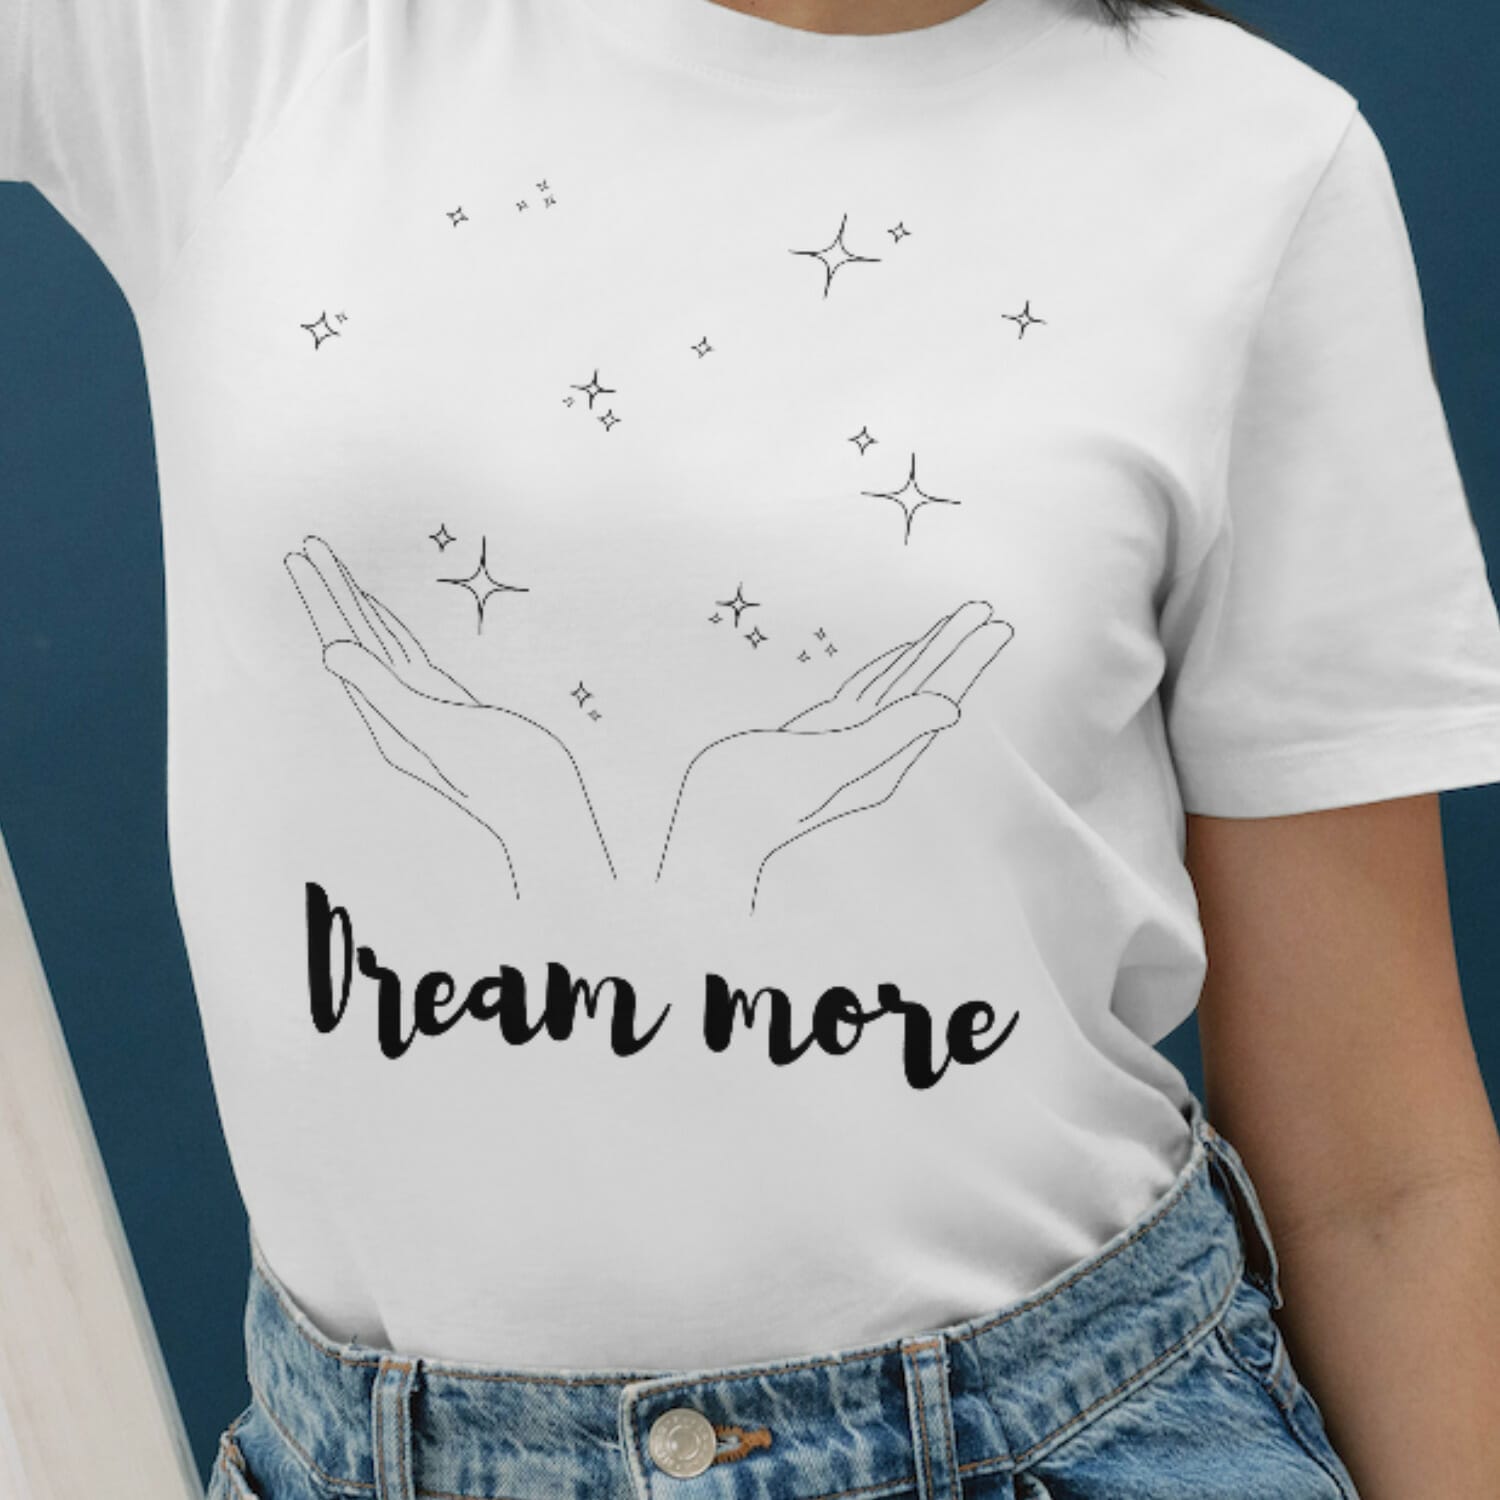 Dream more - Motivational Tshirt design